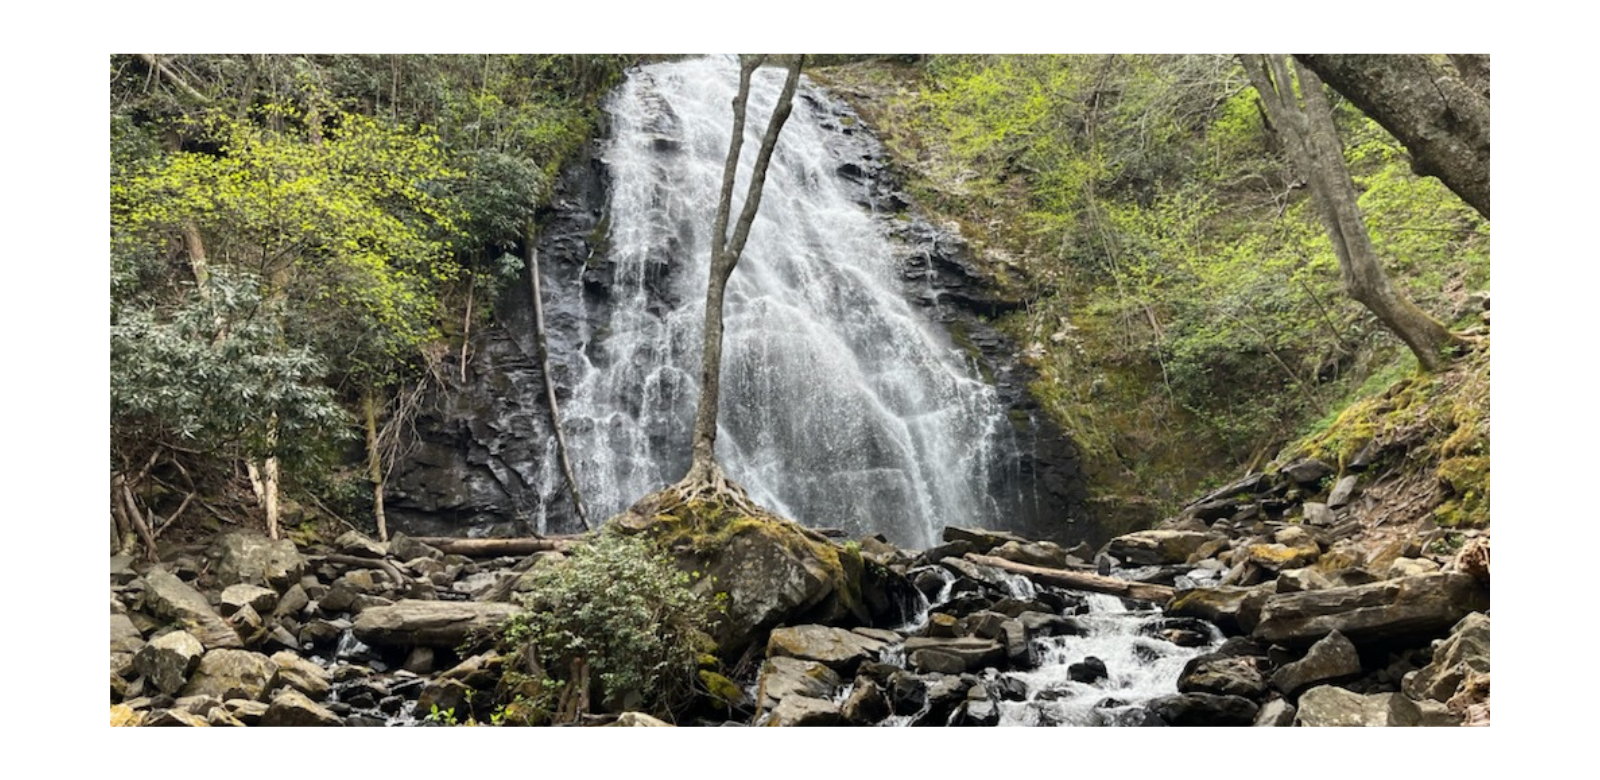 Hike to beautiful waterfalls like Grassy Creek or Linville Falls